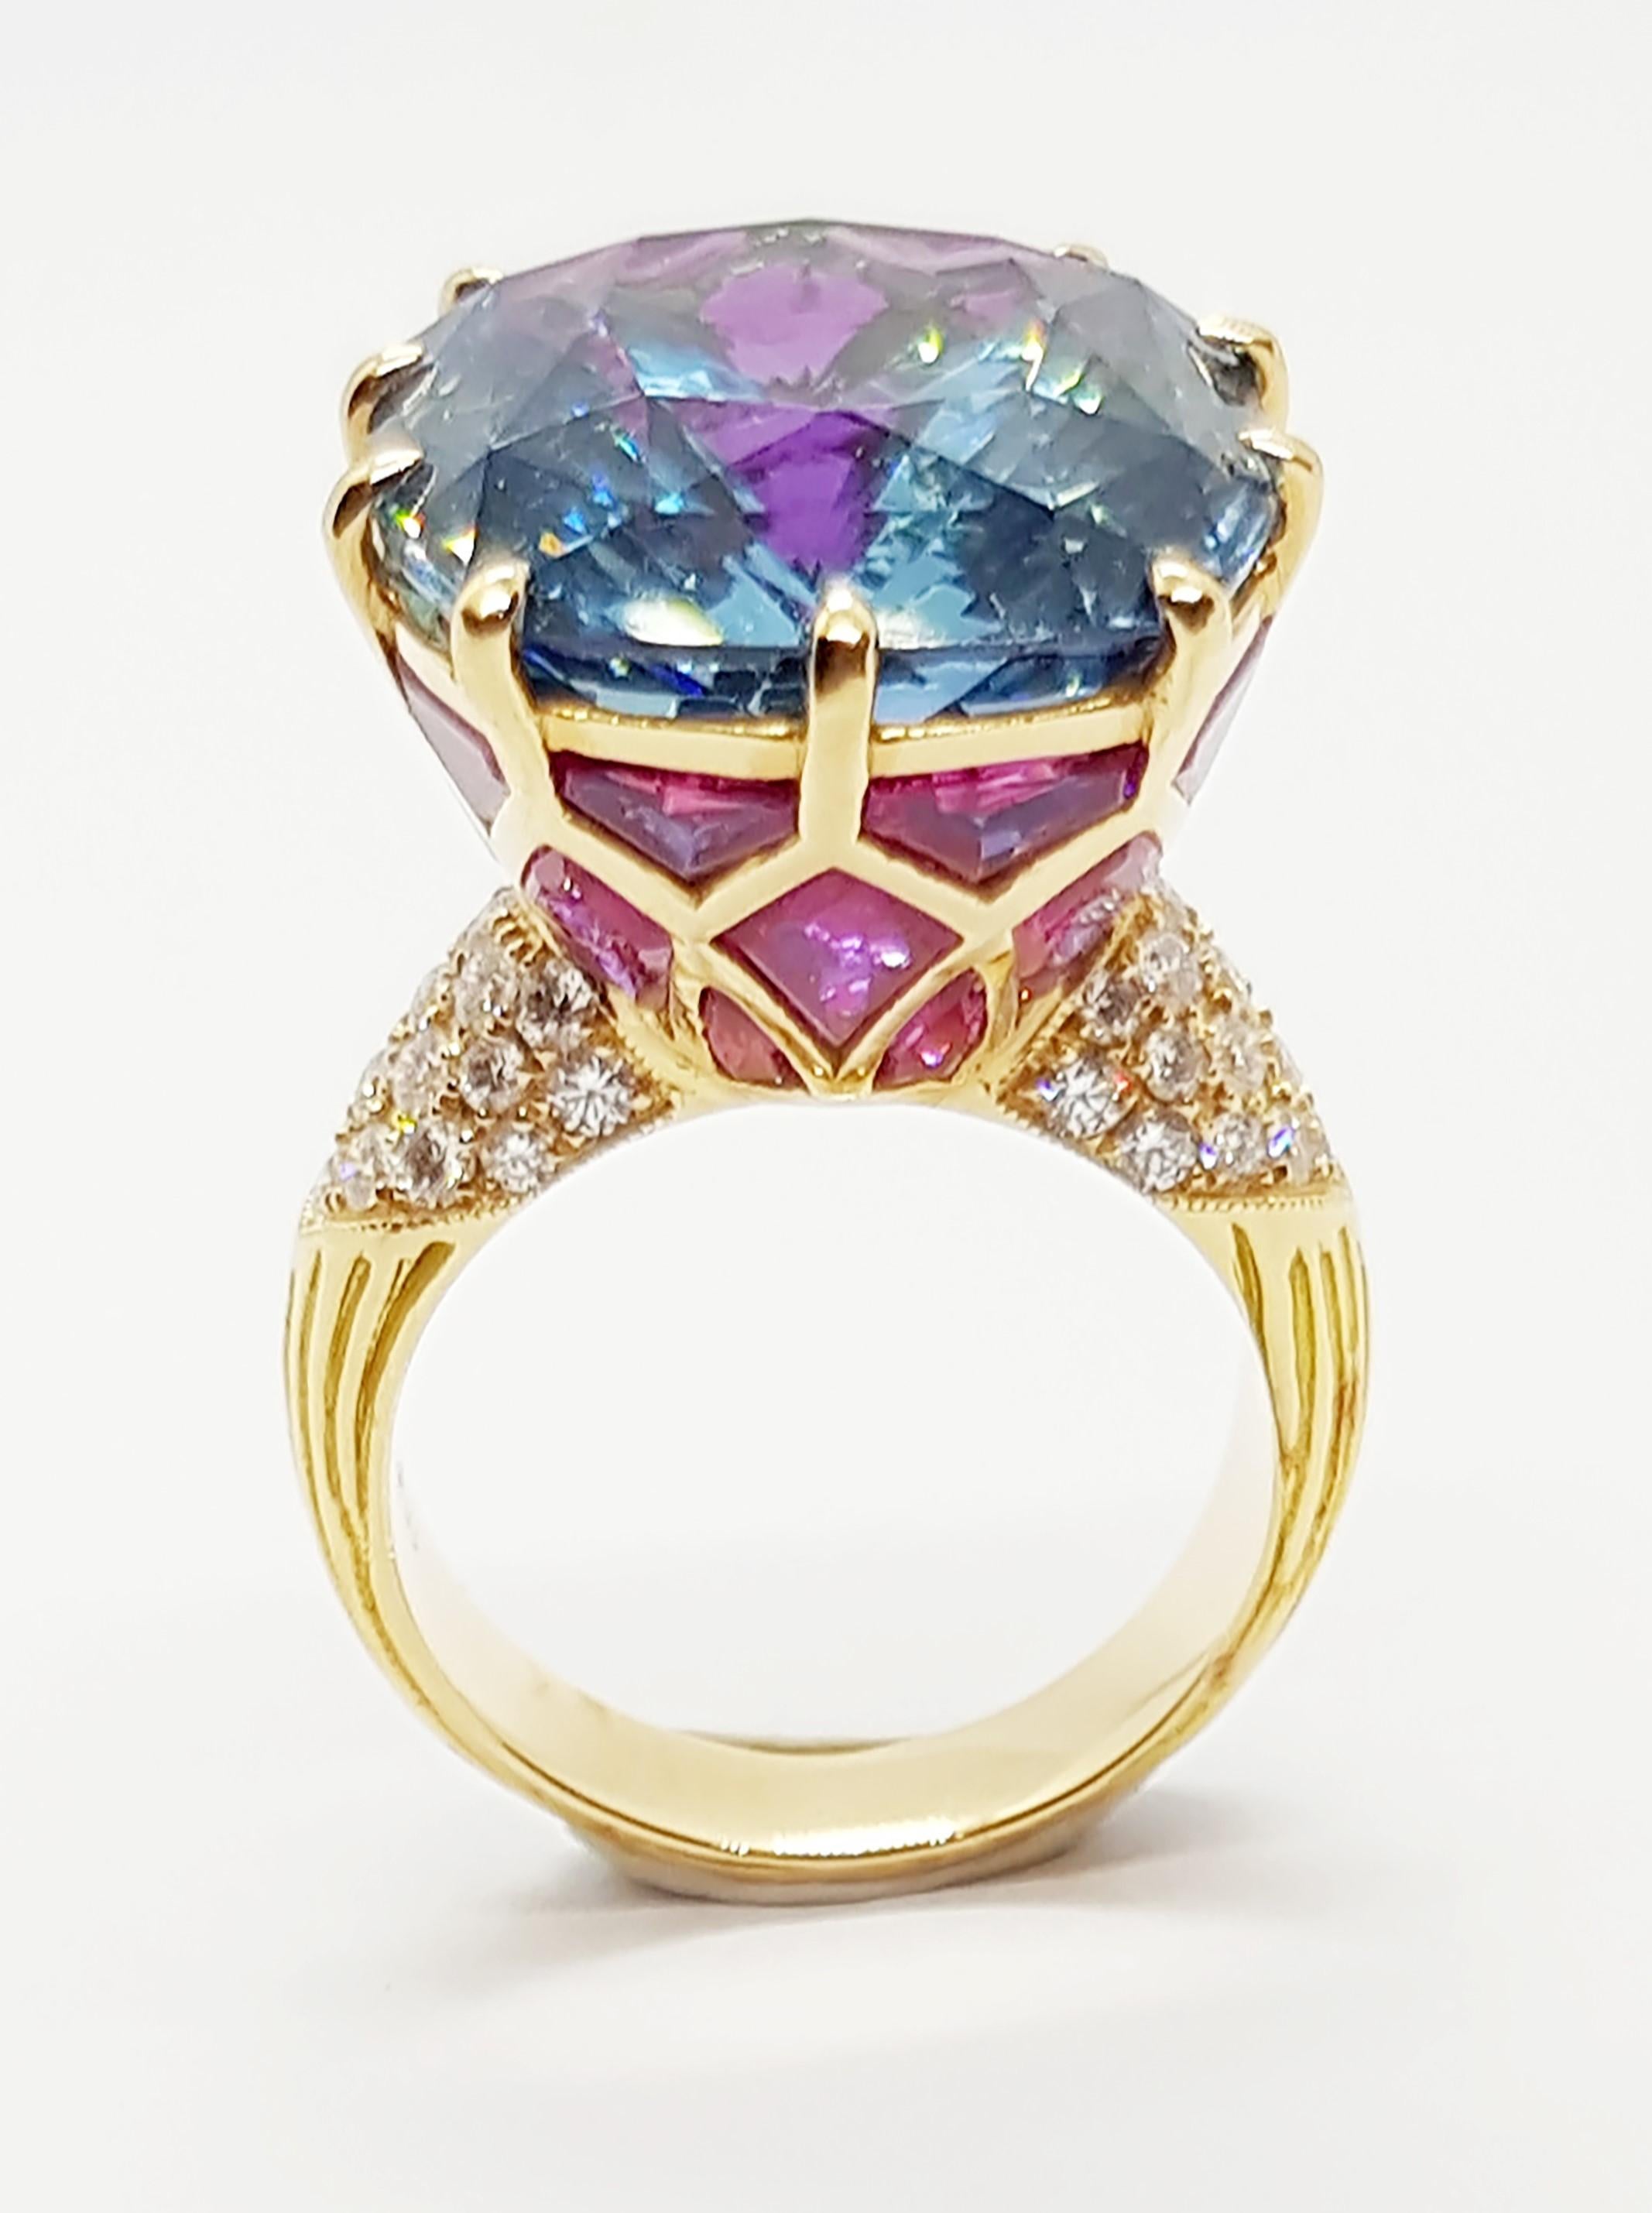 Santa Maria Aquamarine 19.19 carats wit Ruby 4.86 carats and Diamond 0.71 carat Ring set in 18 Karat Rose Gold Settings
(GRS Certified)

Width:  1.8 cm 
Length: 2.1 cm
Ring Size: 54
Total Weight: 14.69 grams

